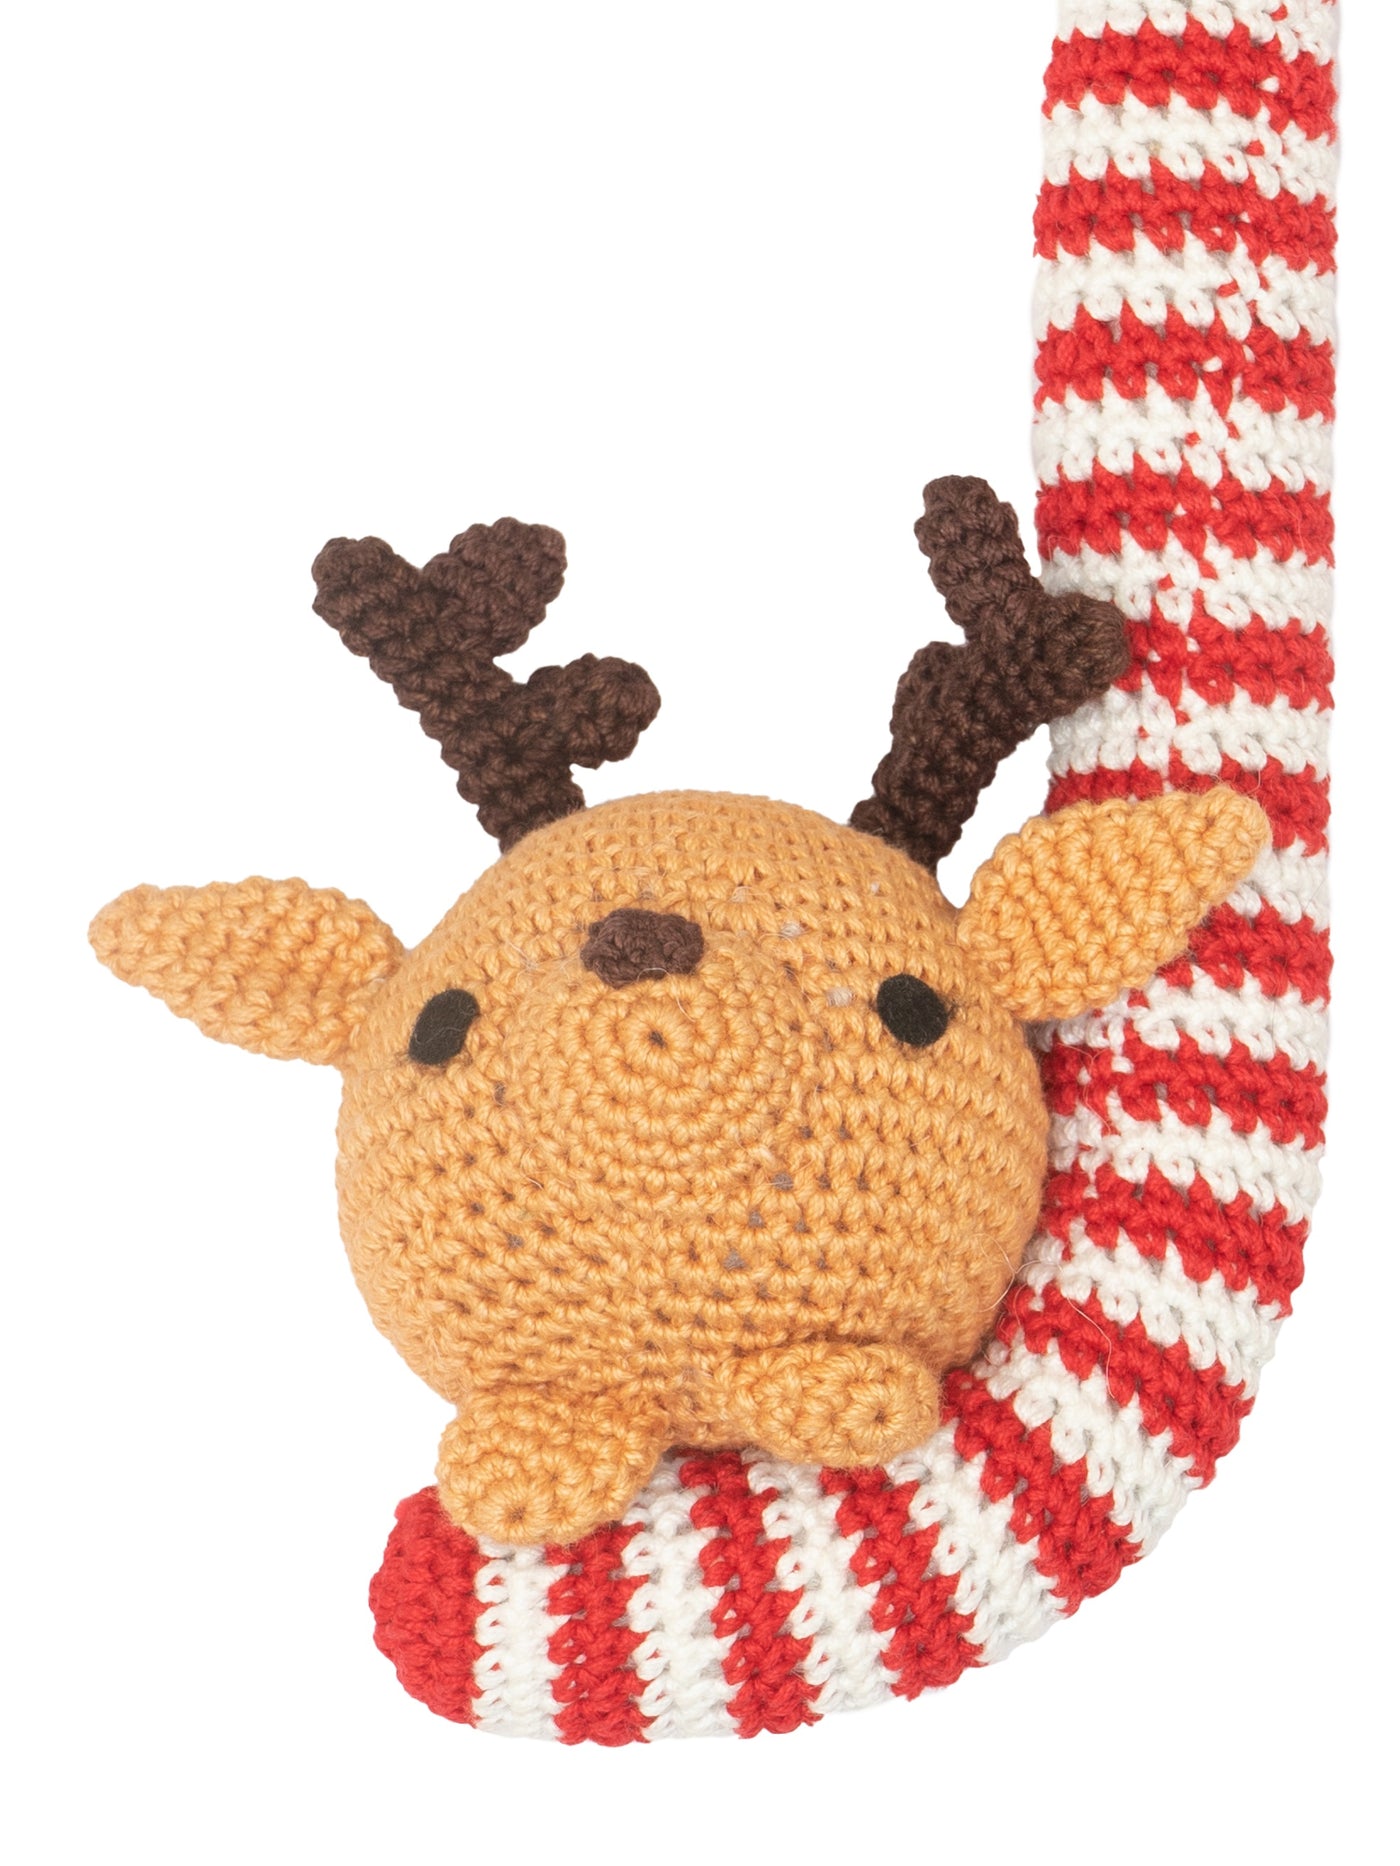 Handcrafted Amigurumi Christmas Tree Ornament-
Reindeer